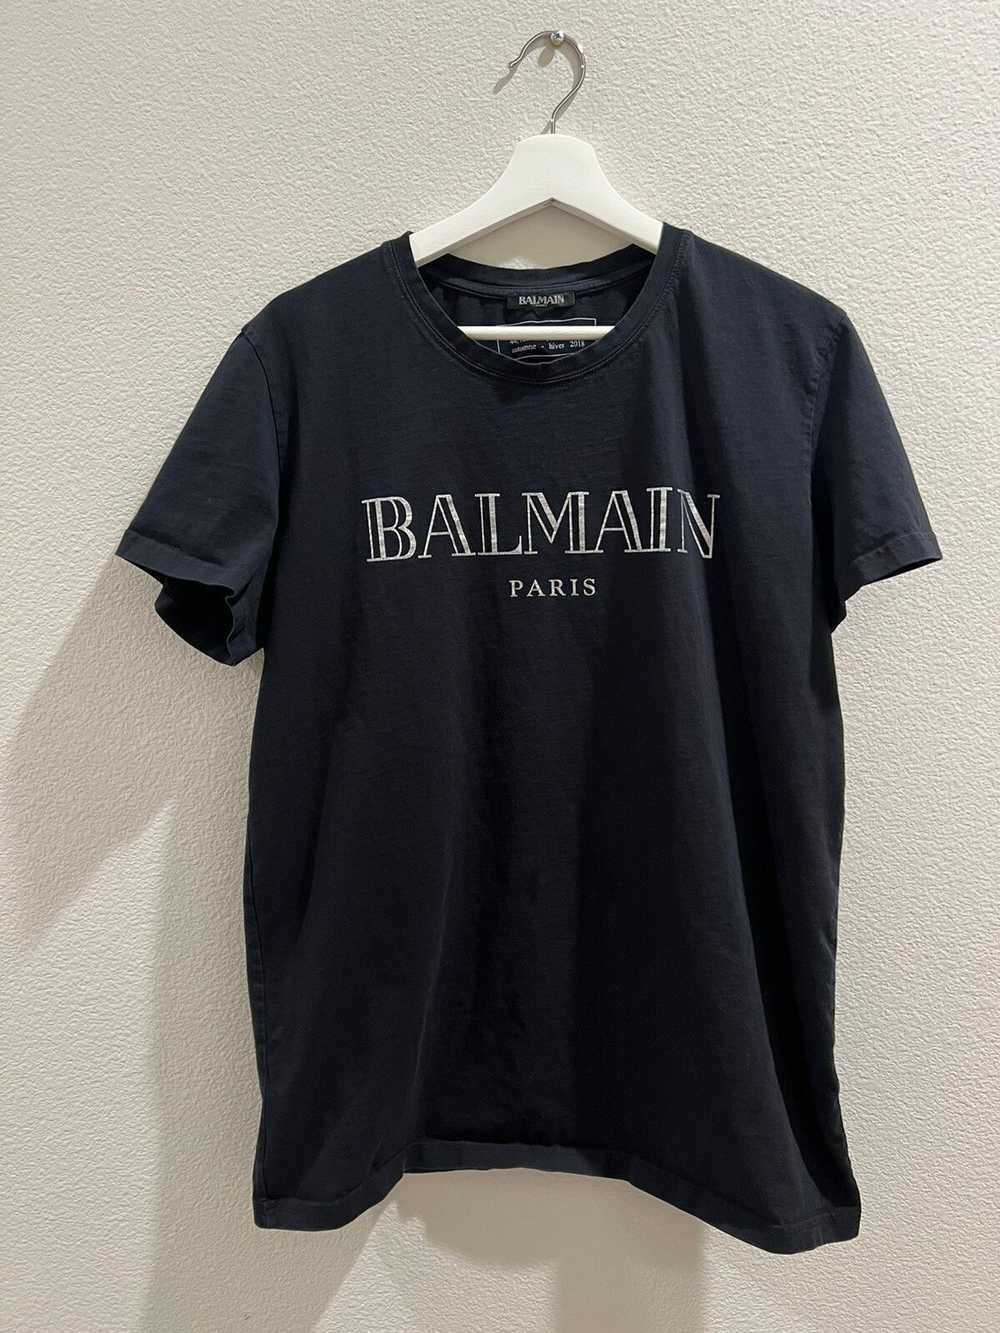 Balmain Balmain Logo Black T Shirt - image 1